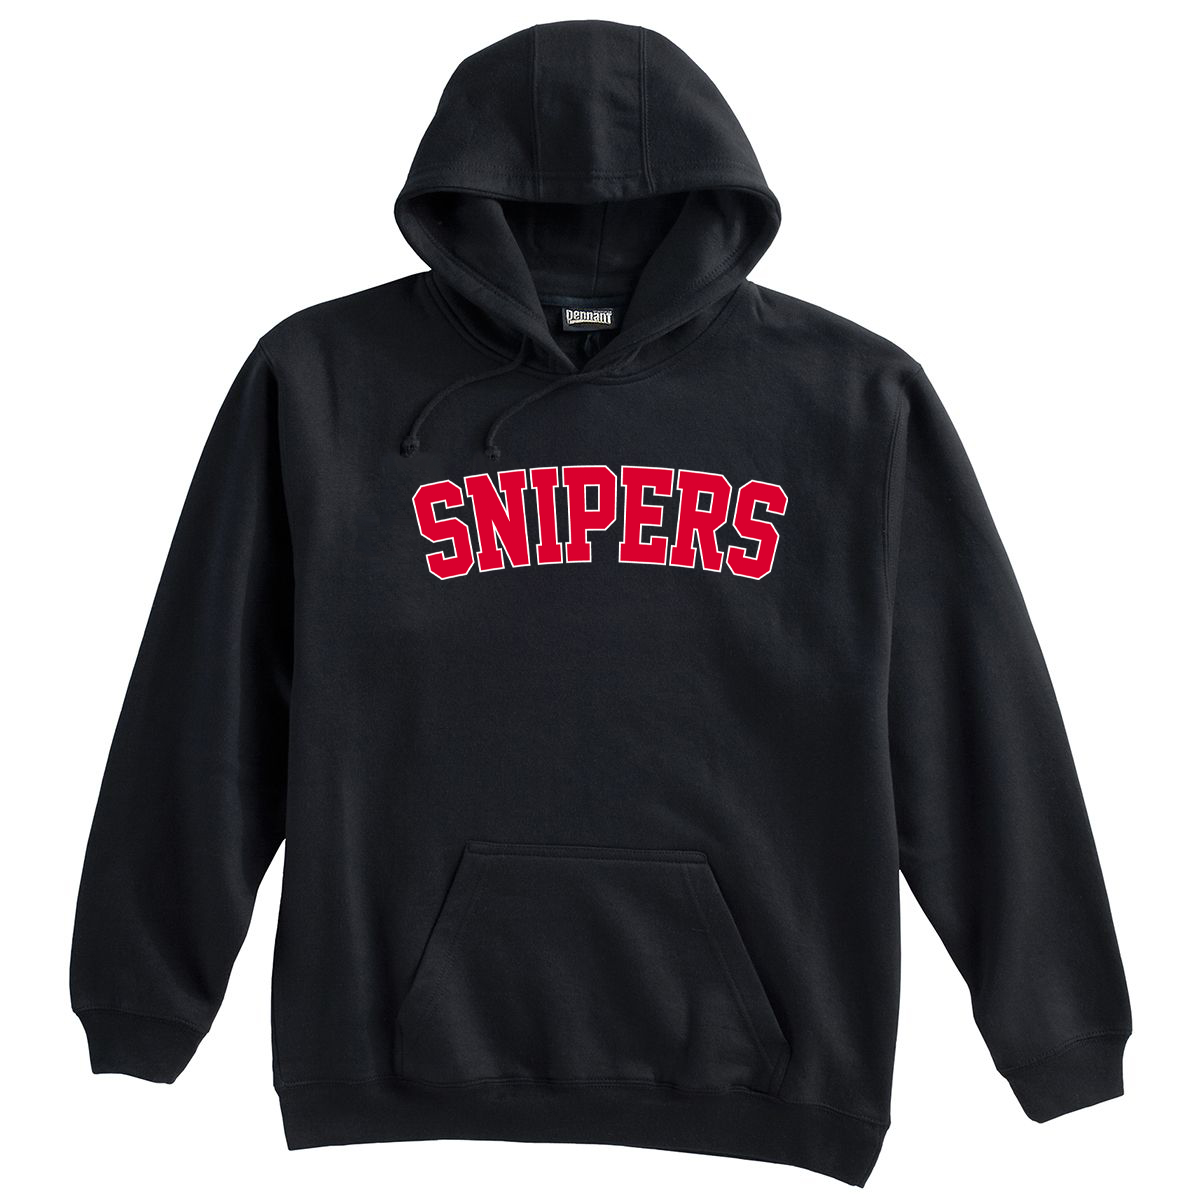 Snipers Baseball Sweatshirt